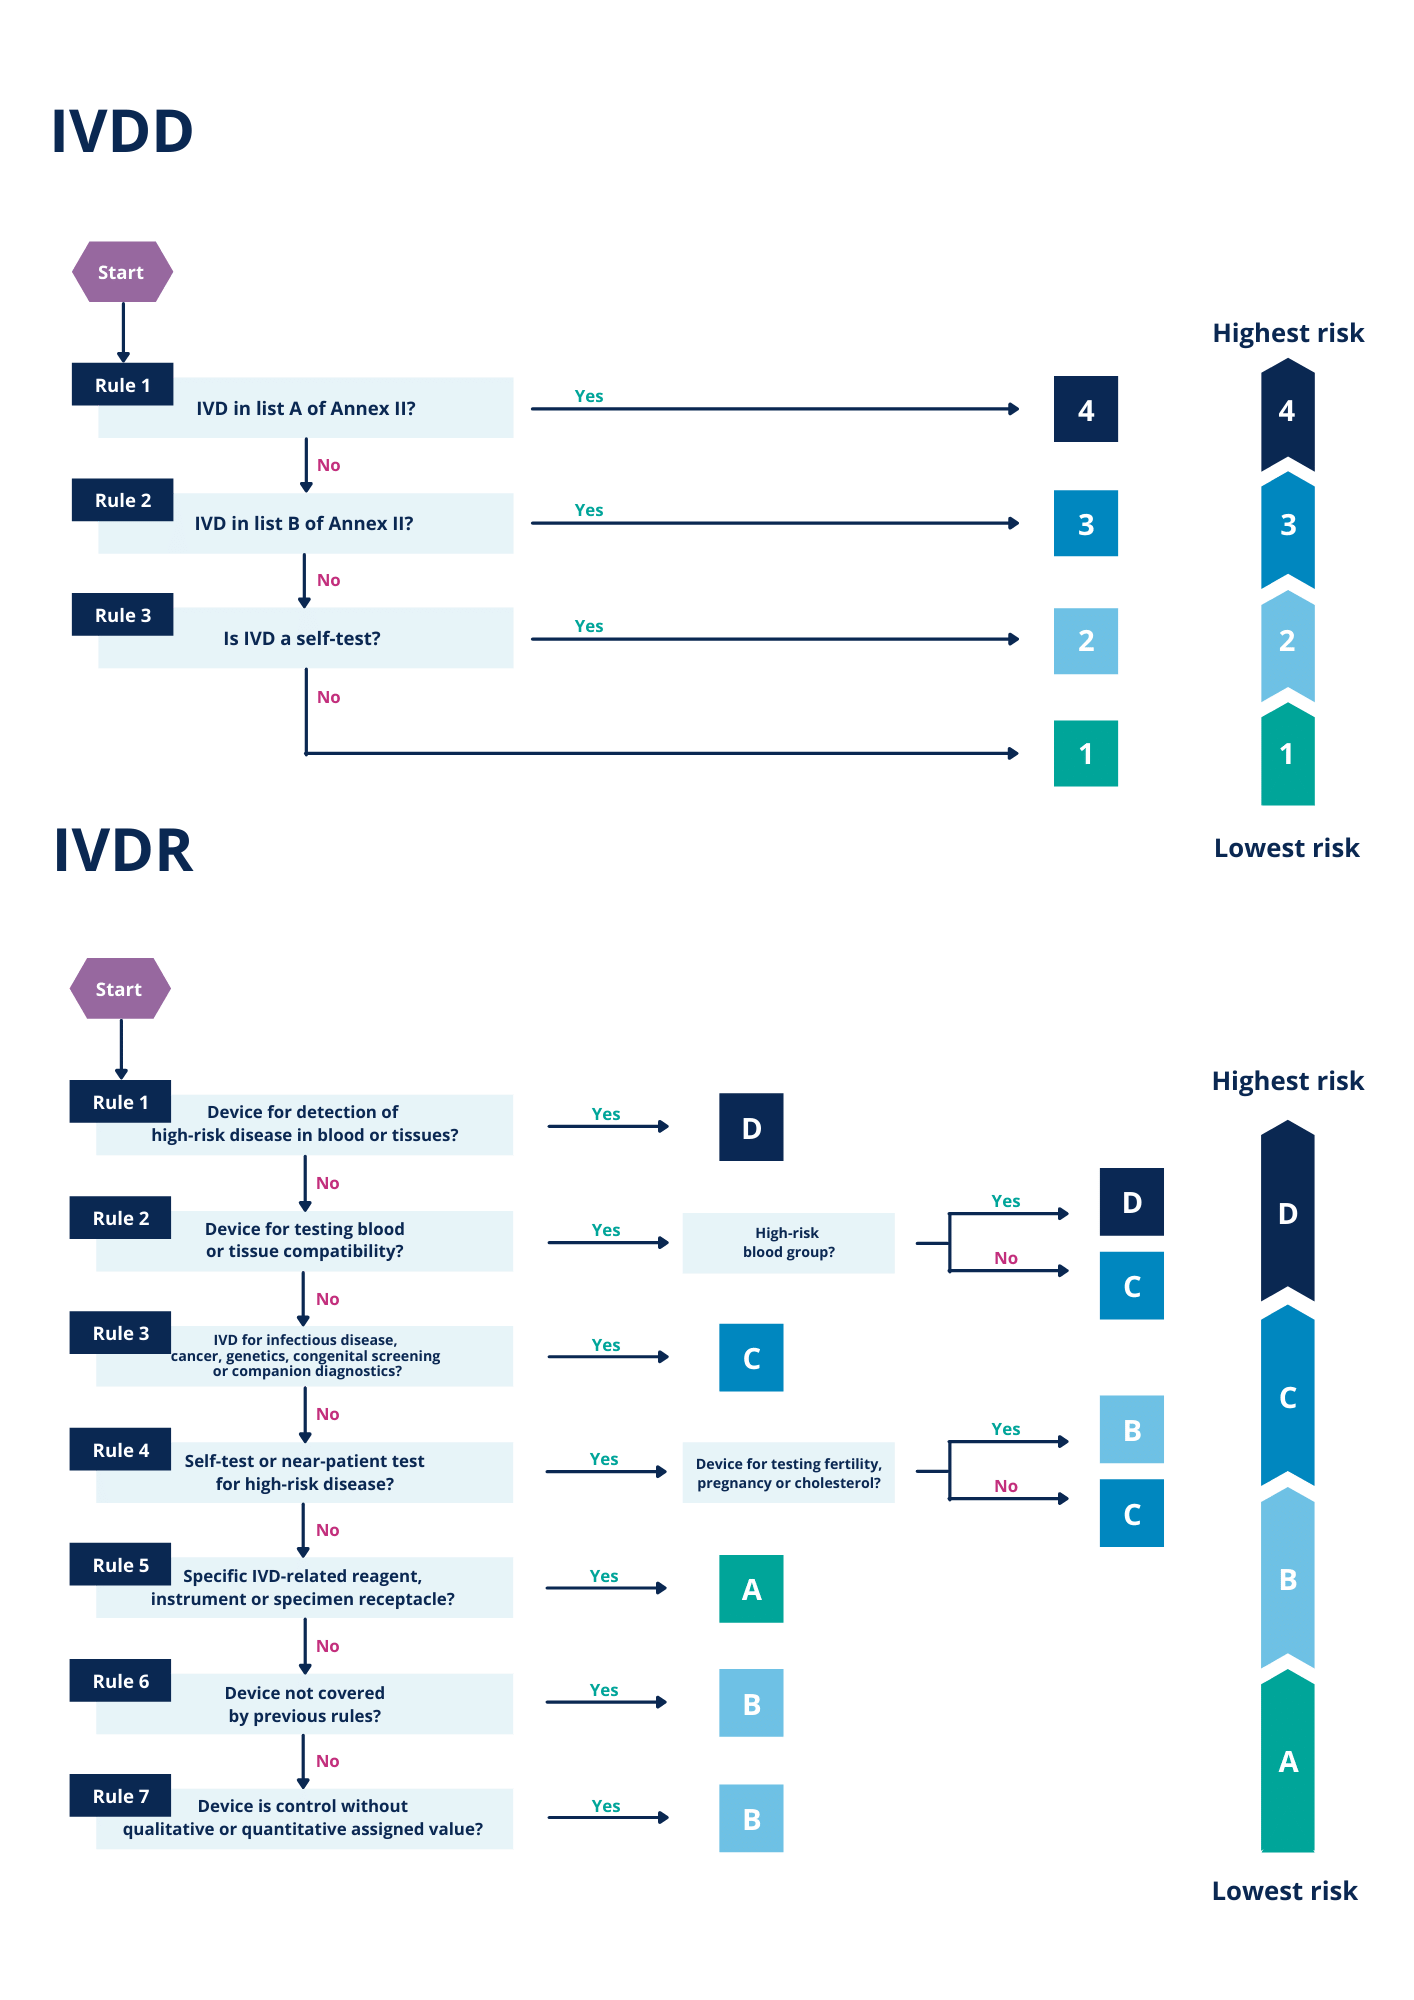 Flowcharts describing the classification process under IVDD and IVDR - IVDR classification - QBD